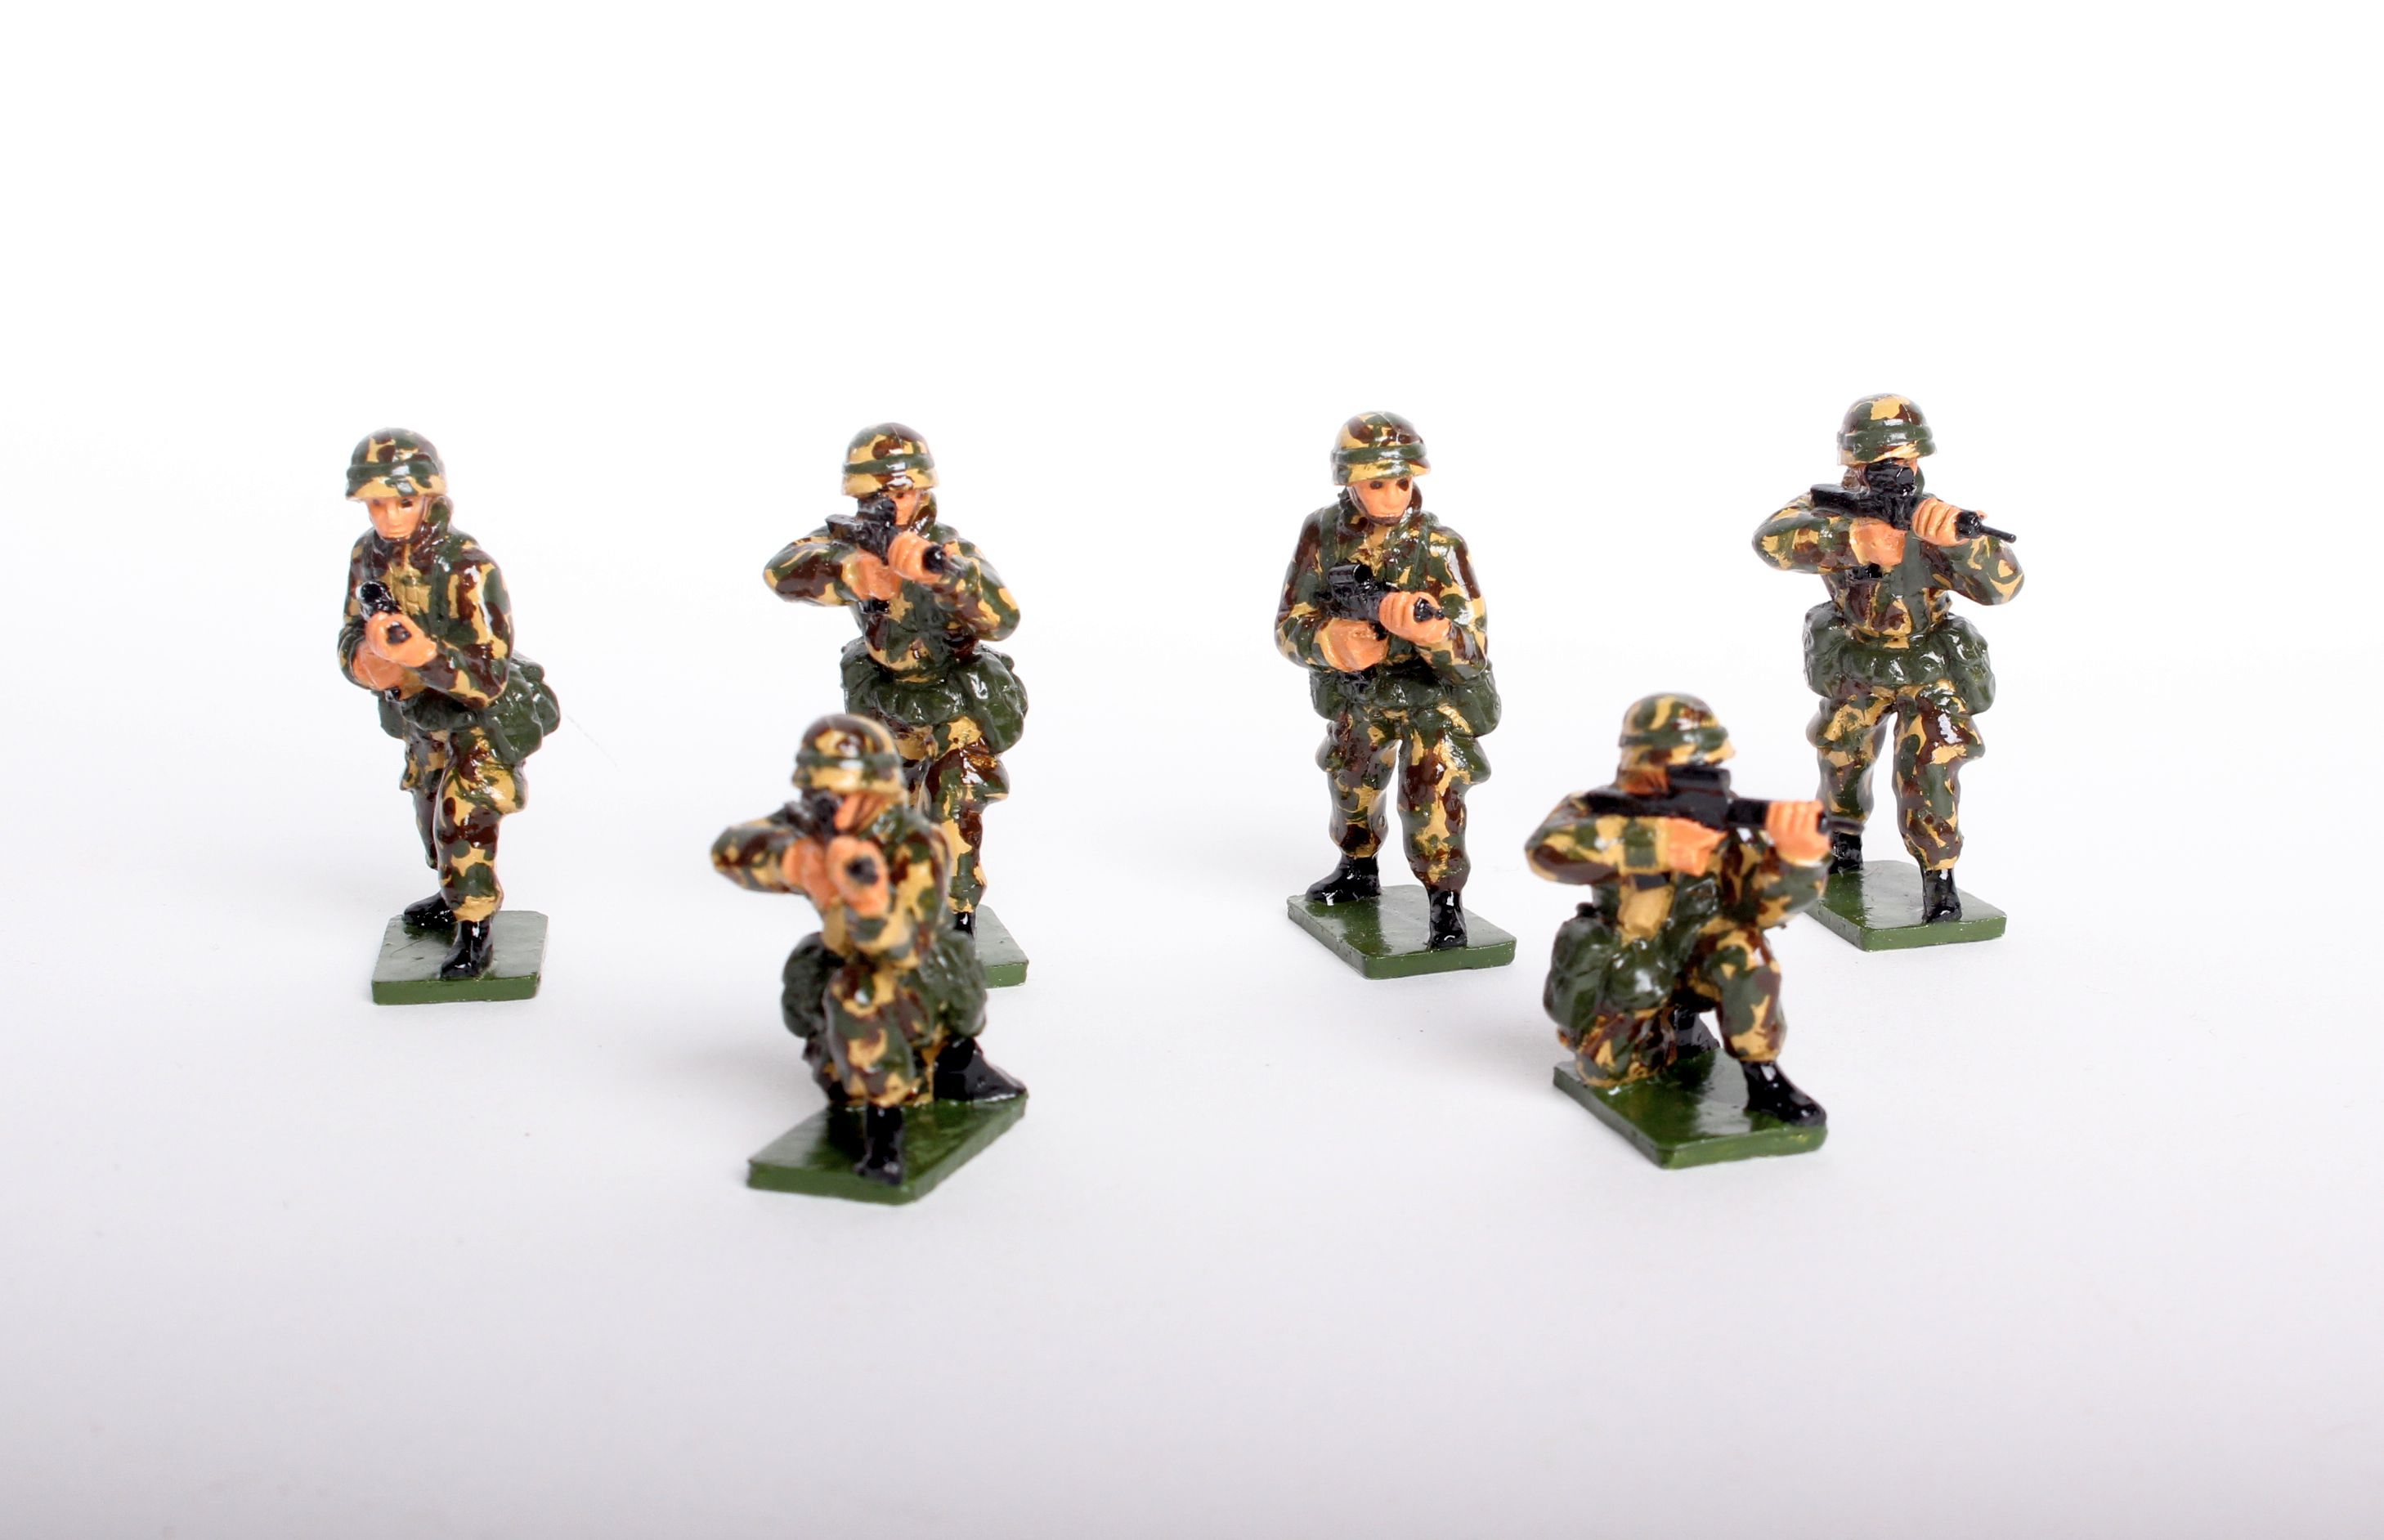 Collectors Soldiers Pathfinder Paras 1990, Zimbabwe Paras 1970's, US Marines Gulf War 1991 - Image 4 of 5